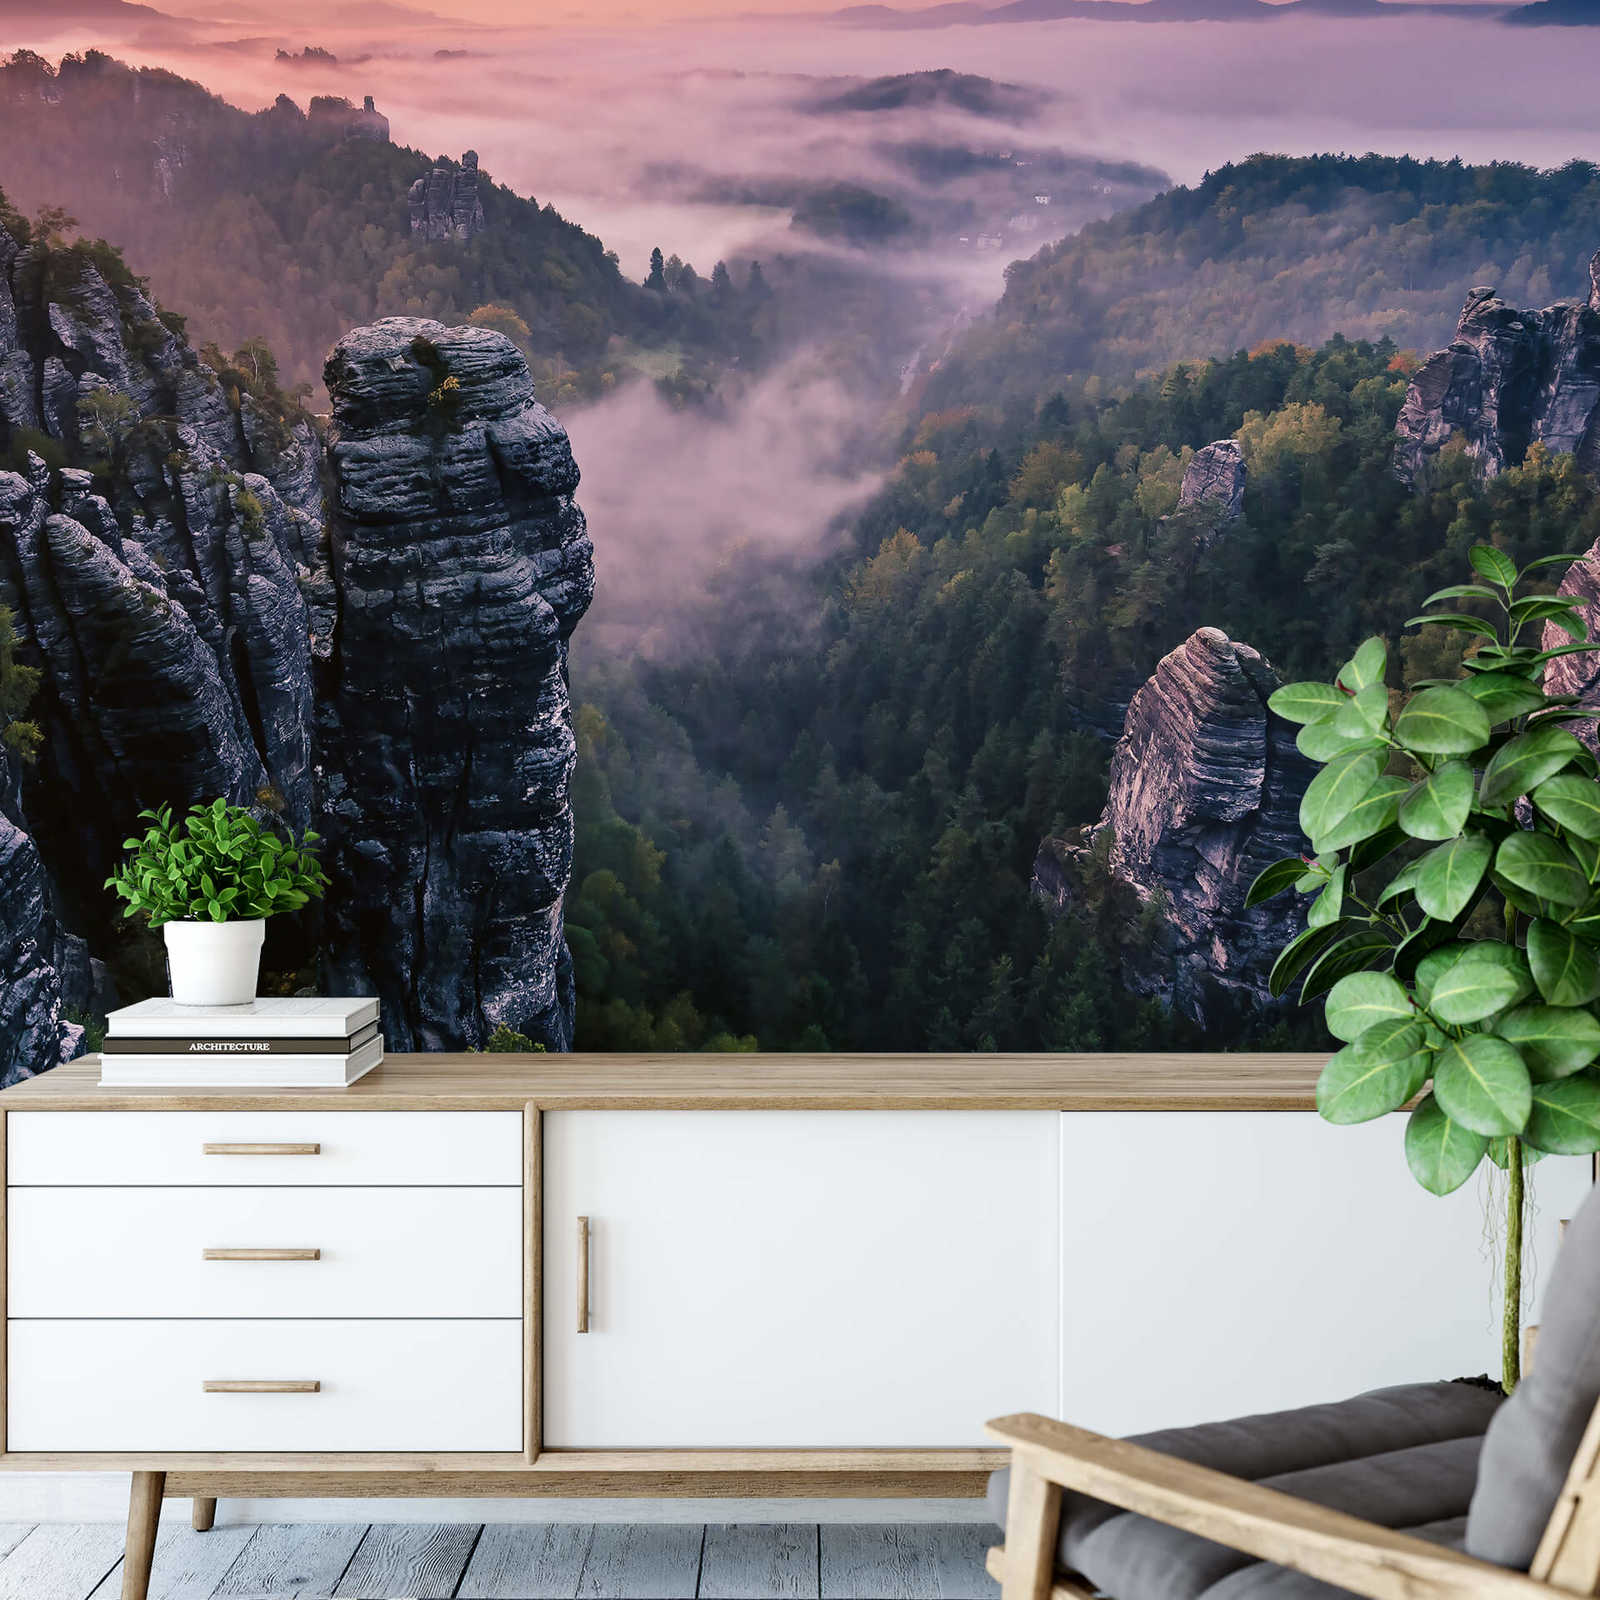             Photo wallpaper sunrise in mountains - grey, green, white
        